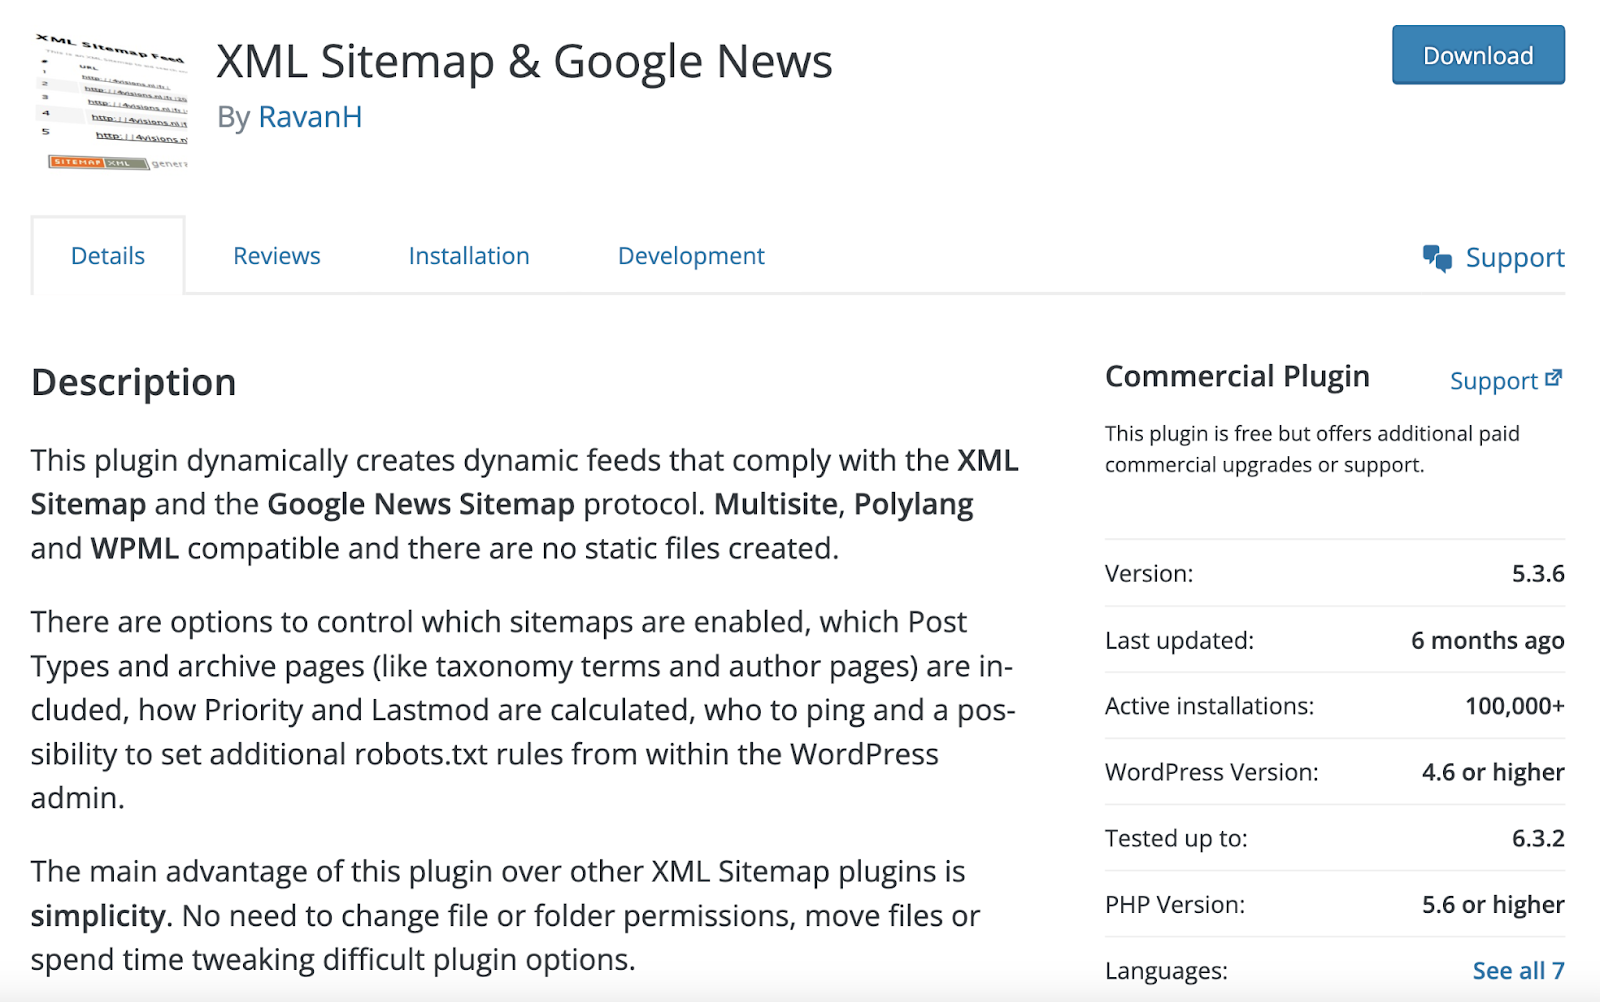 xml sitemap and google news plugin details